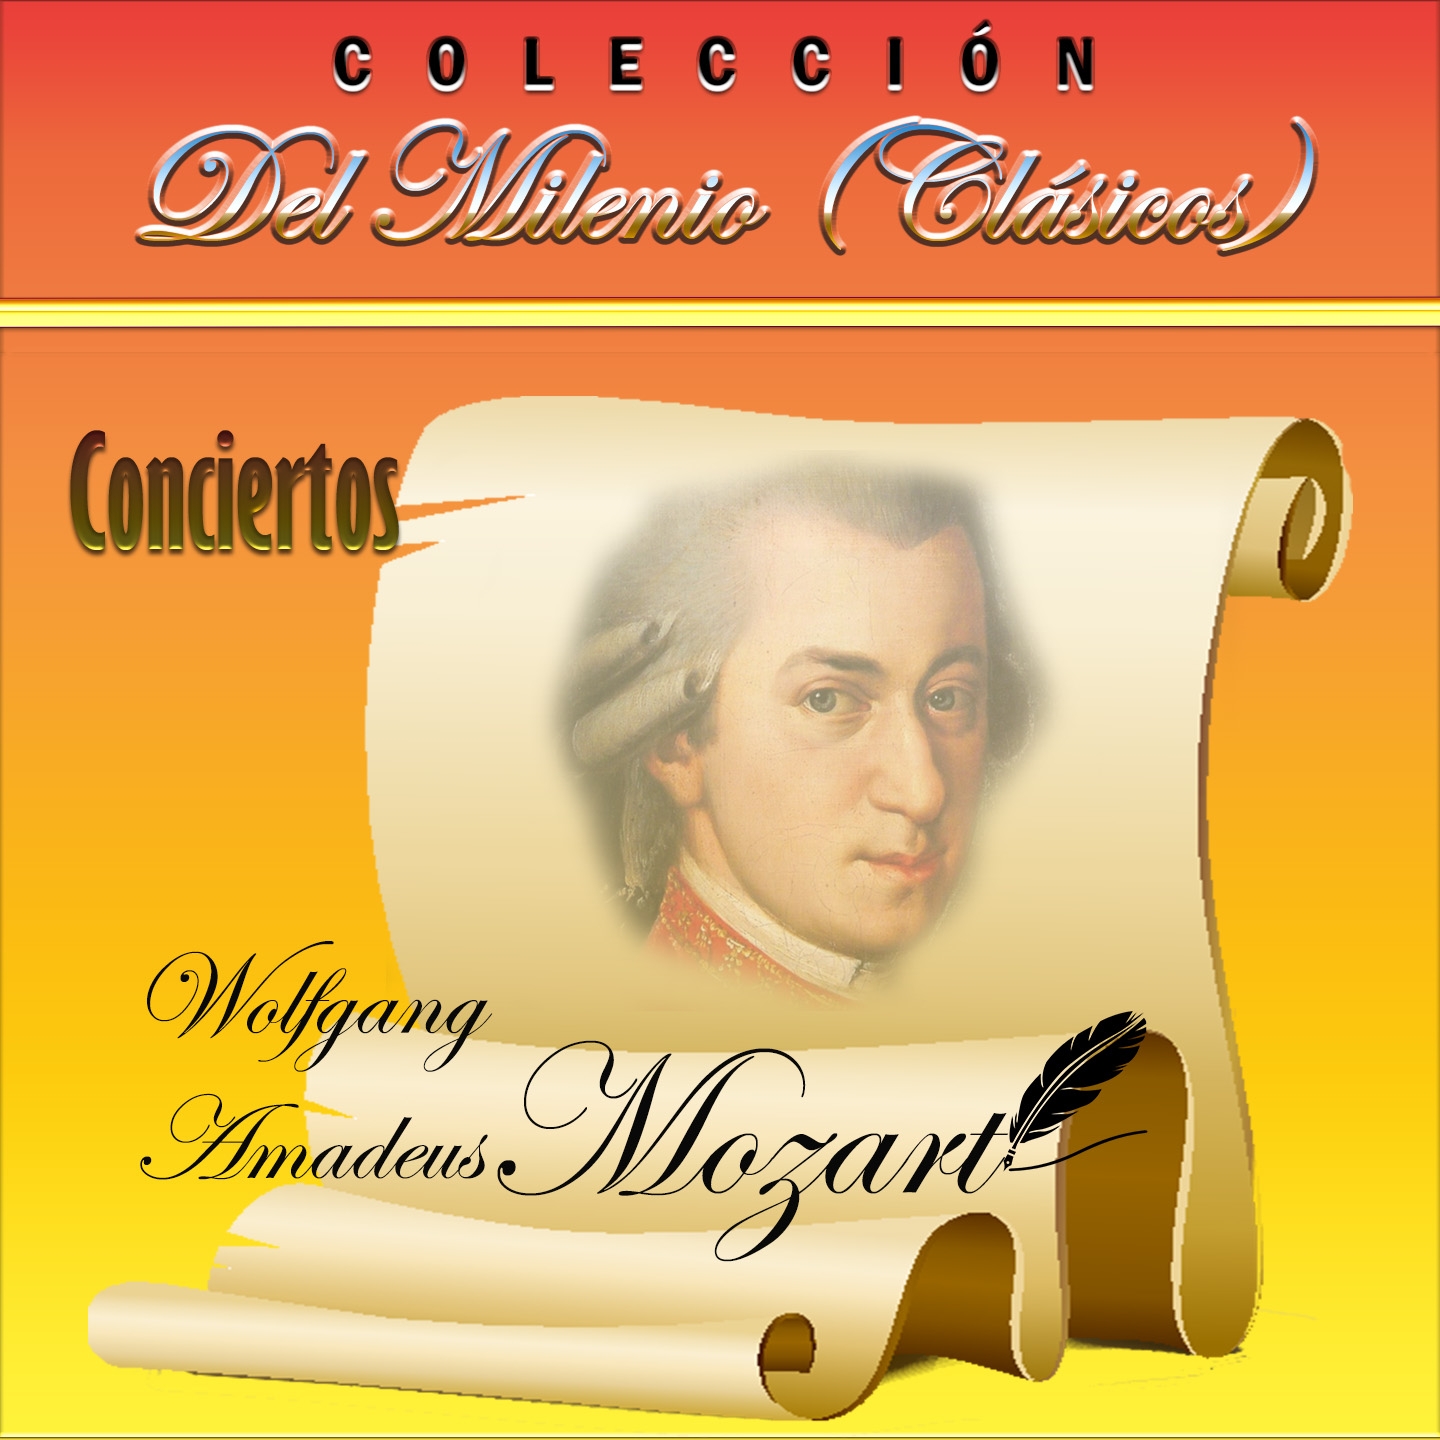 Piano Concerto No. 7 in F Major, K. 242: I. Allegro